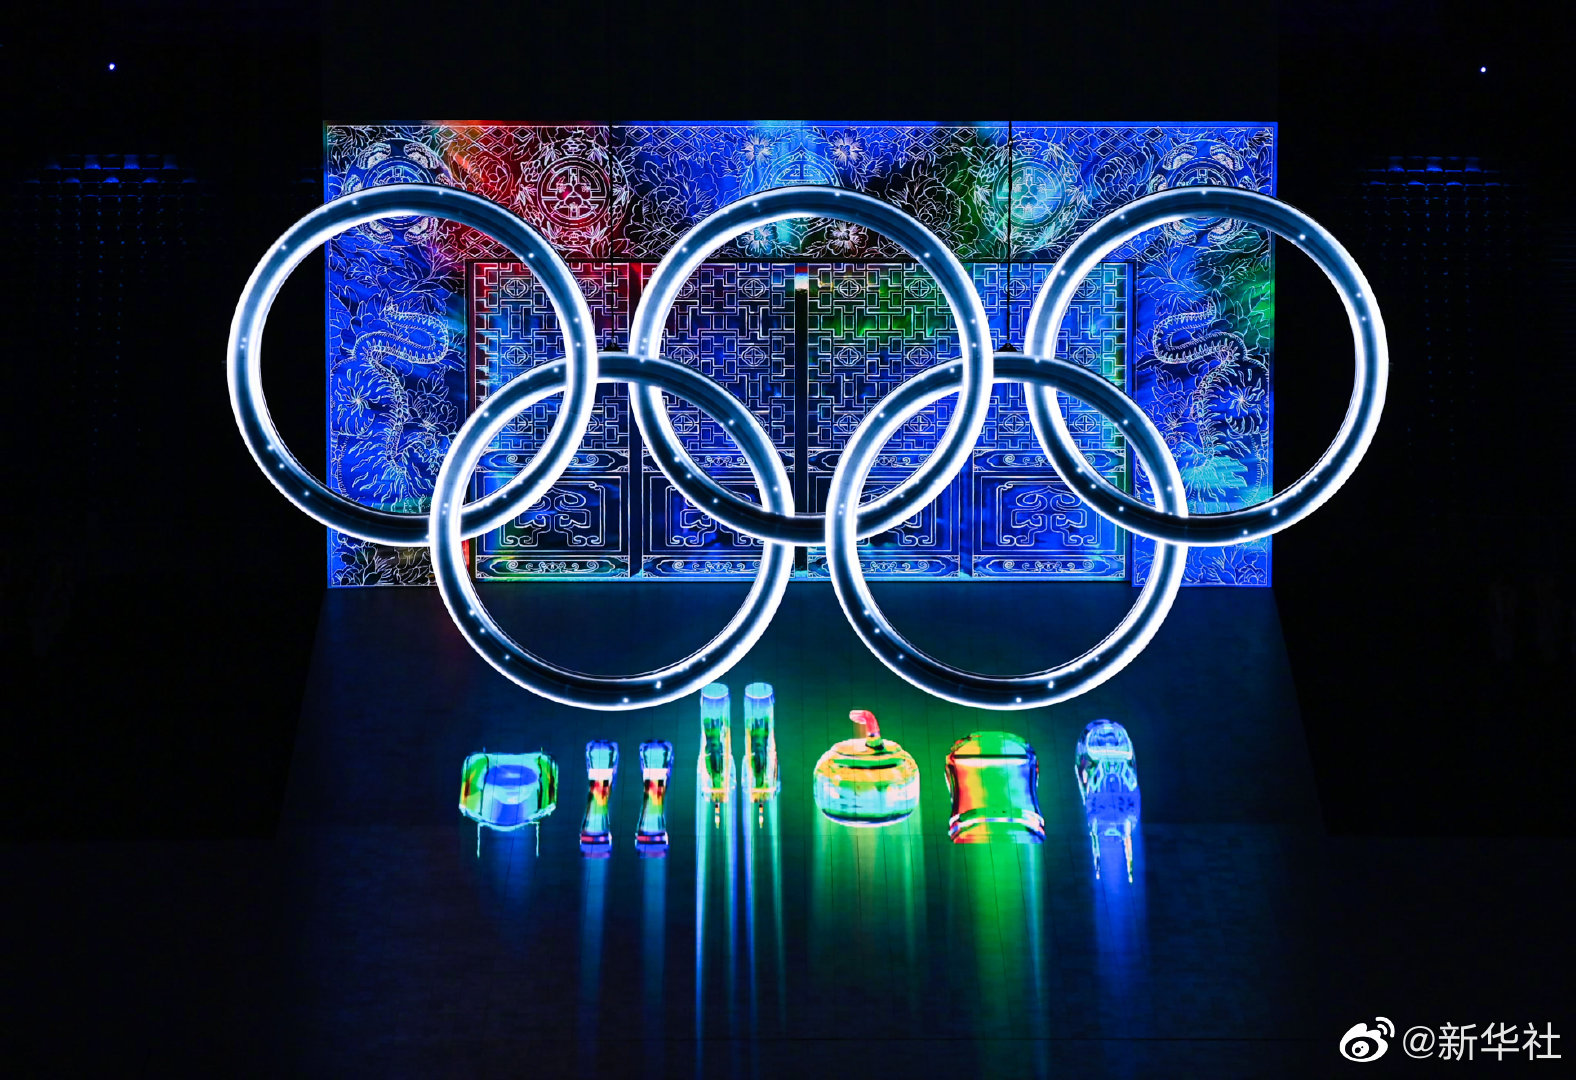 Olympic beijing 2022